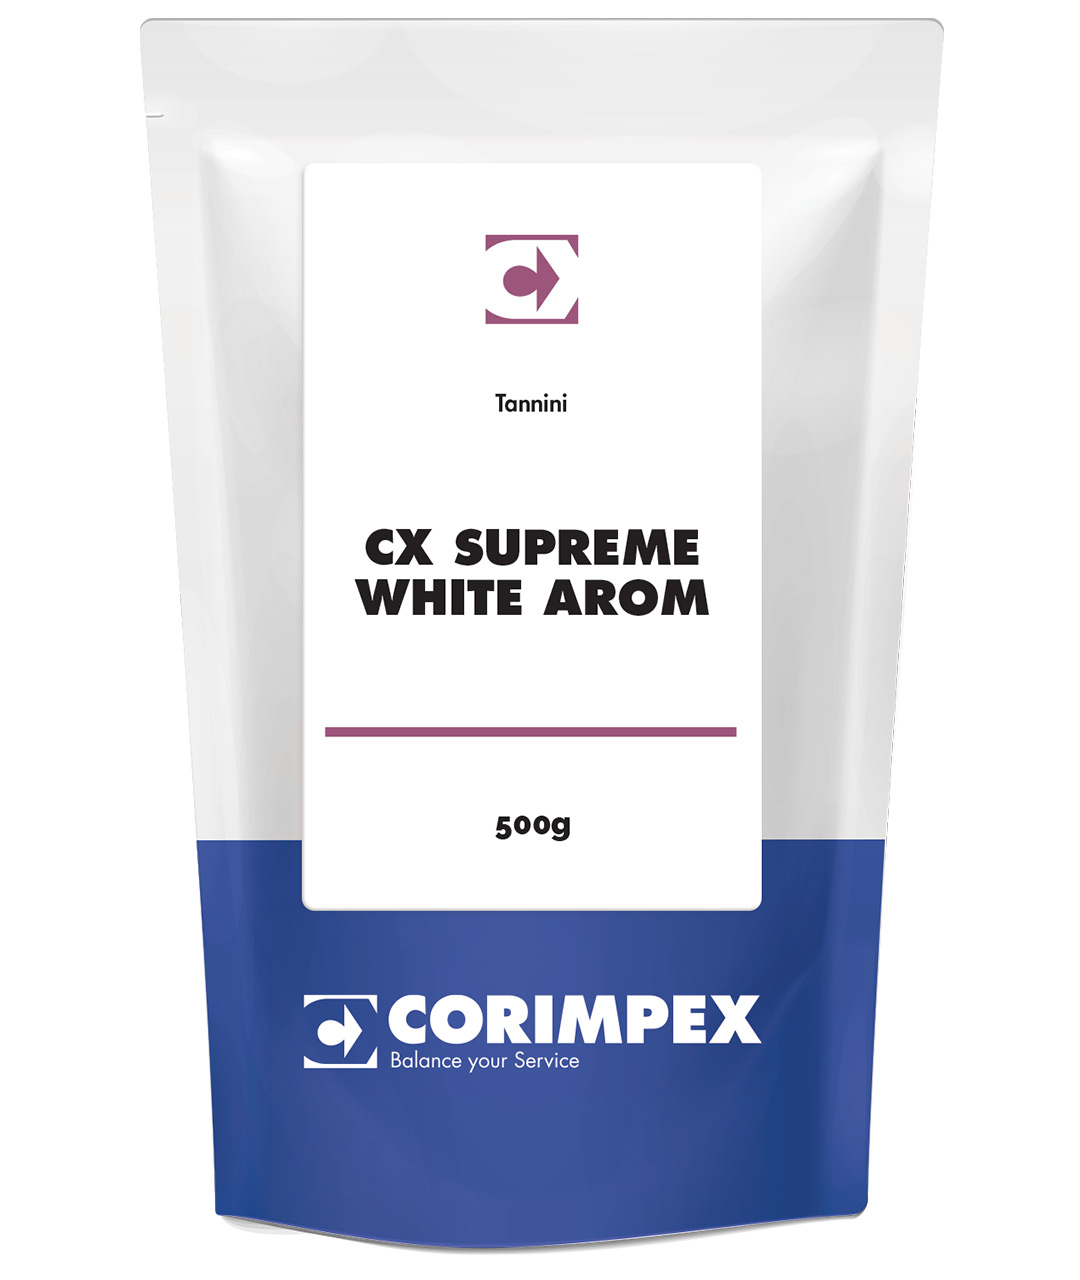 CX SUPREME WHITE AROM